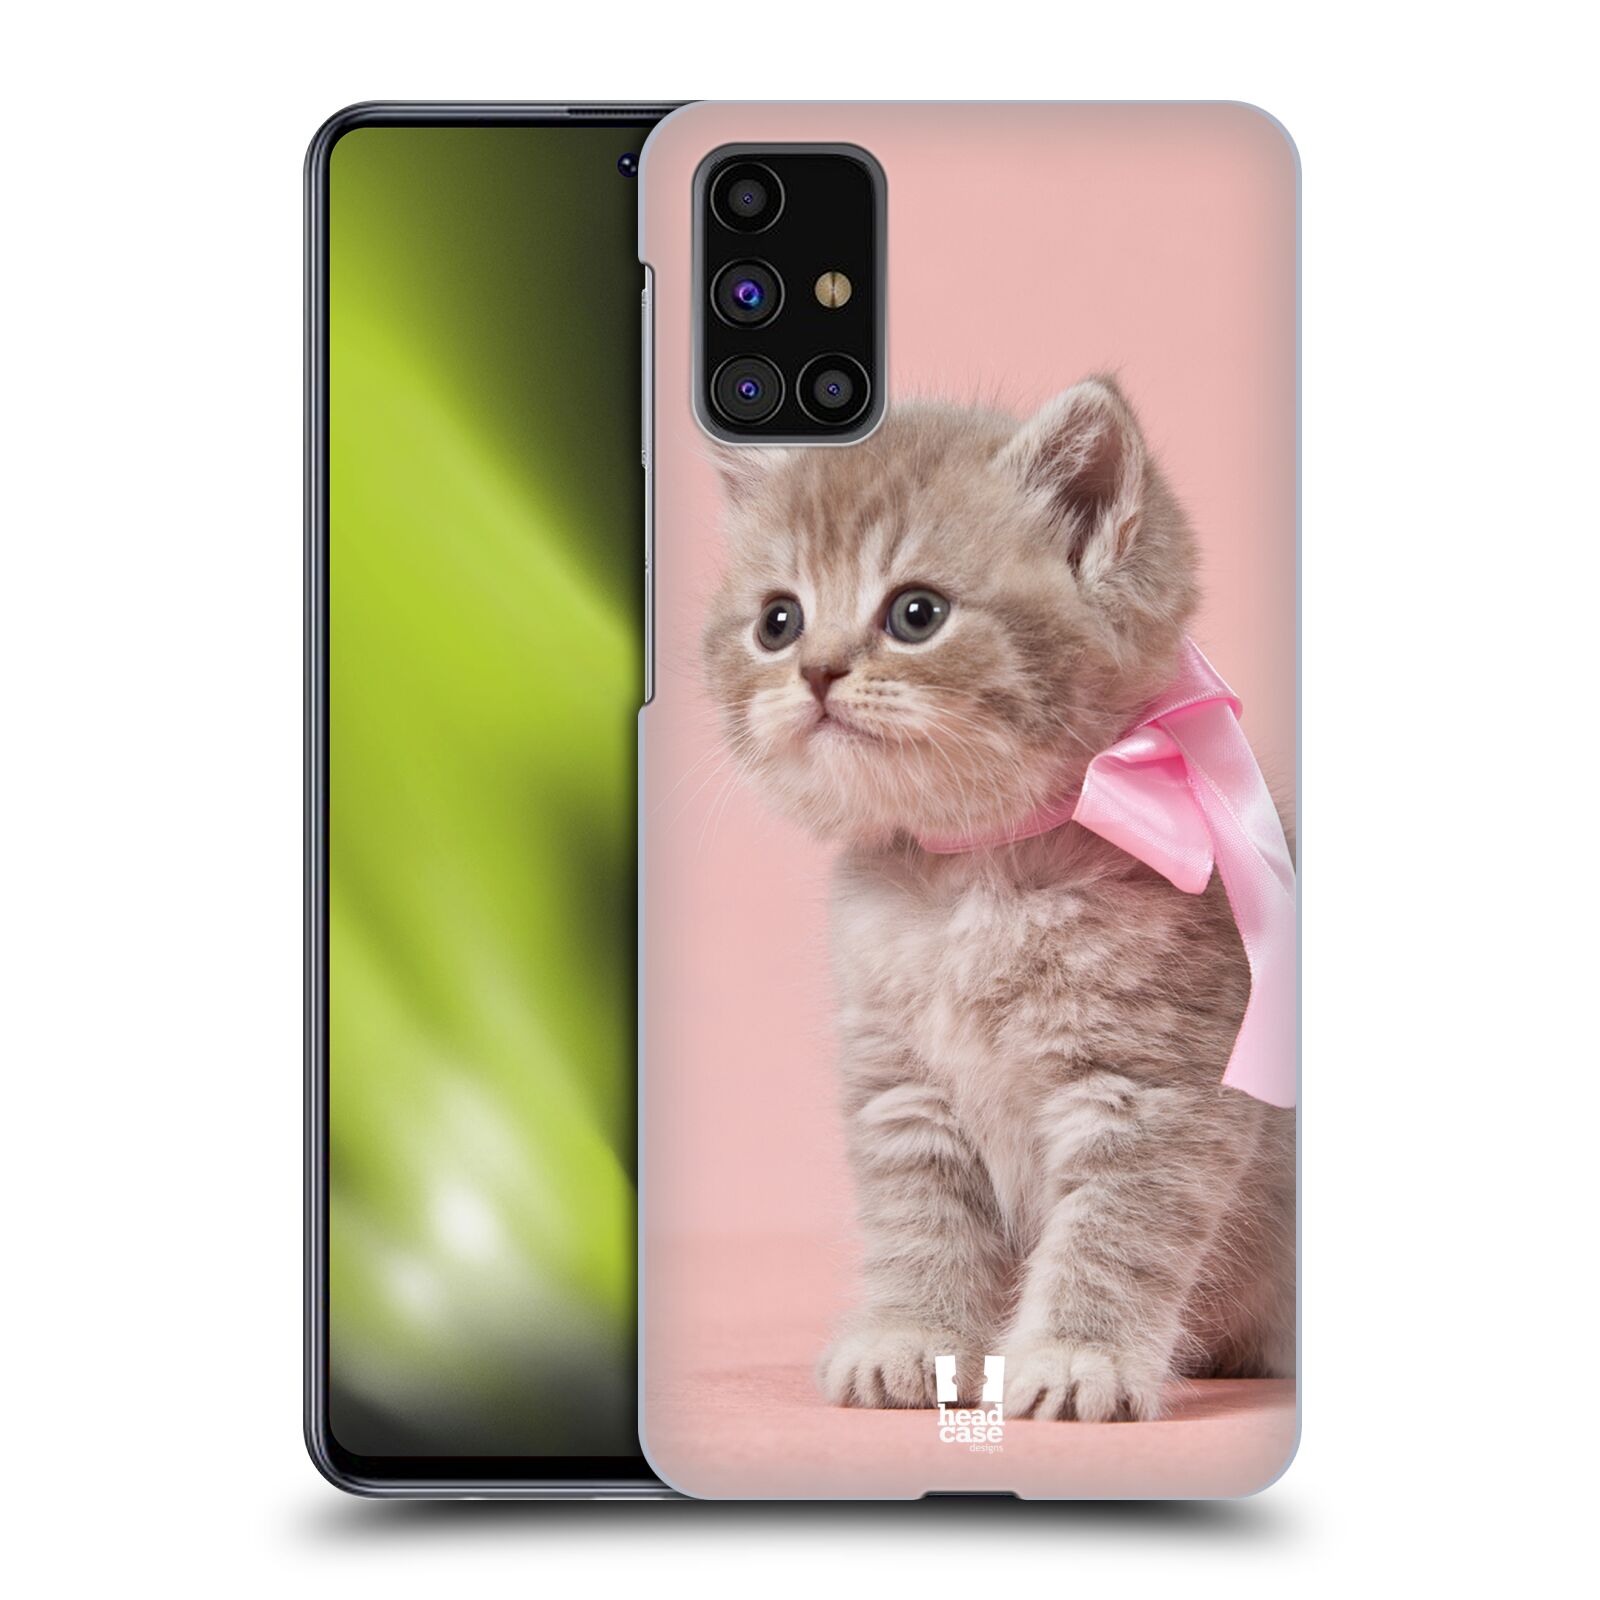 Plastový obal HEAD CASE na mobil Samsung Galaxy M31s vzor Kočičky koťata foto kotě s růžovou mašlí